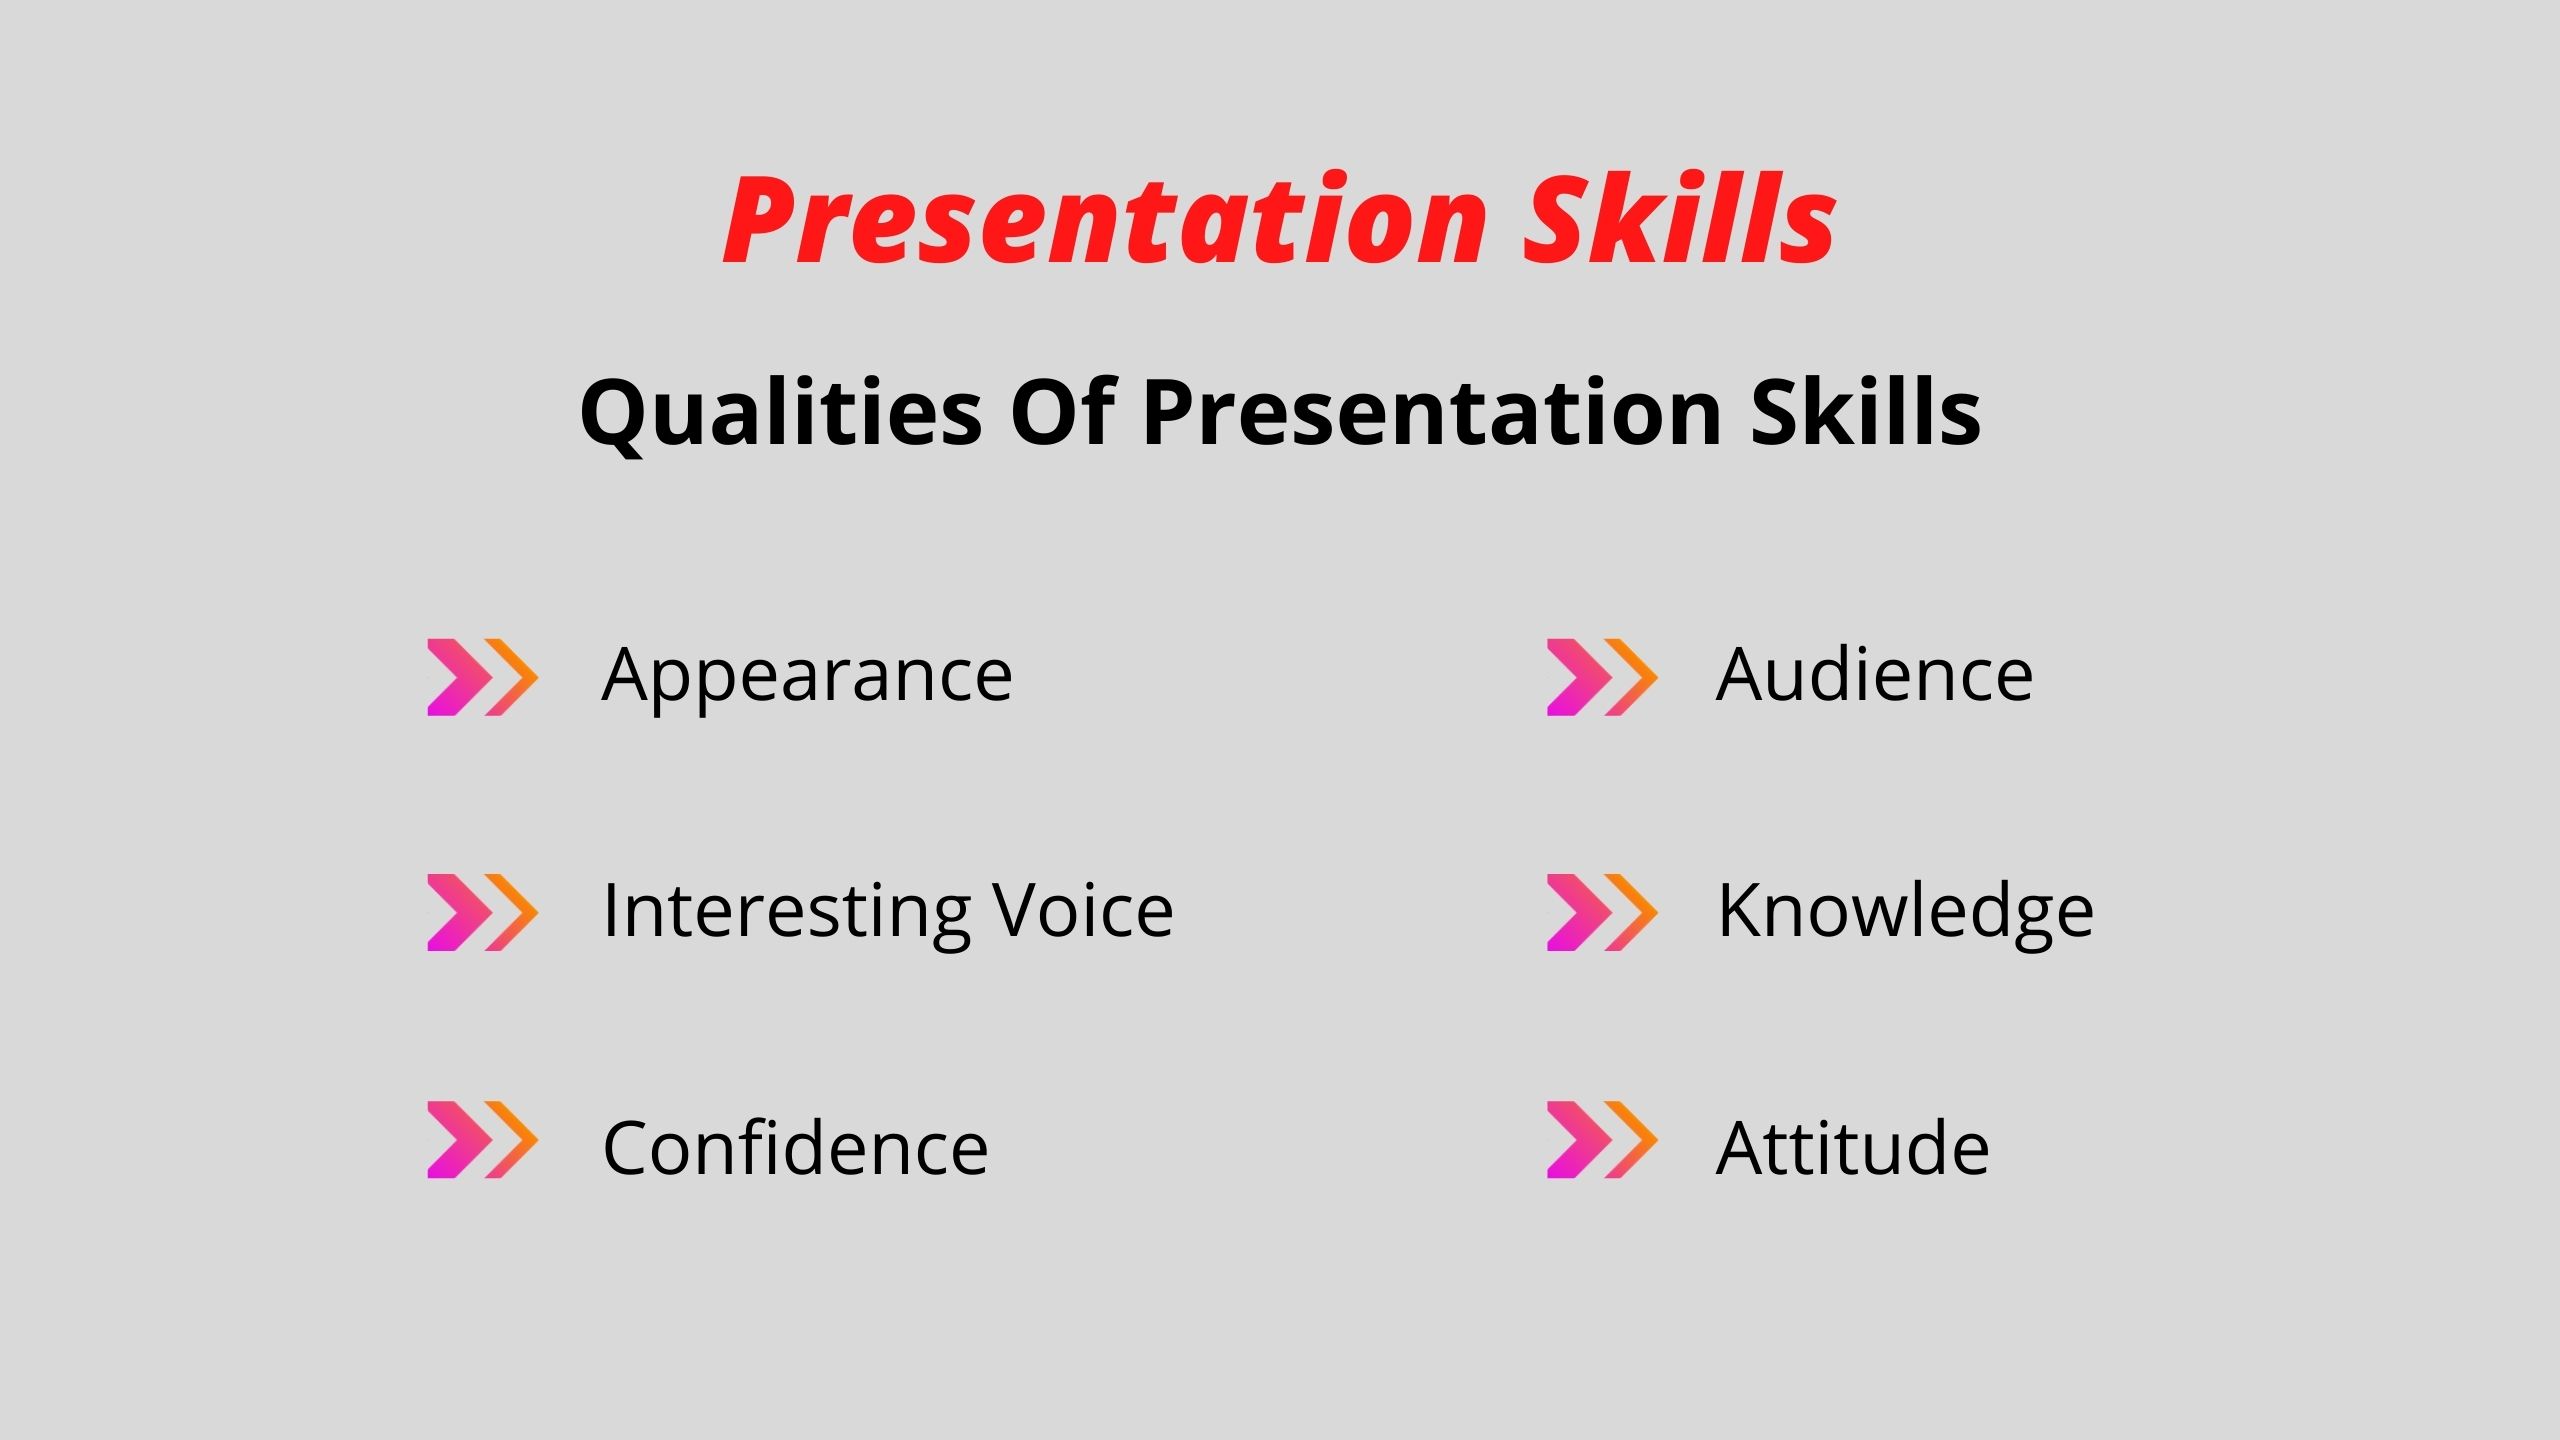 what is presentation challenge